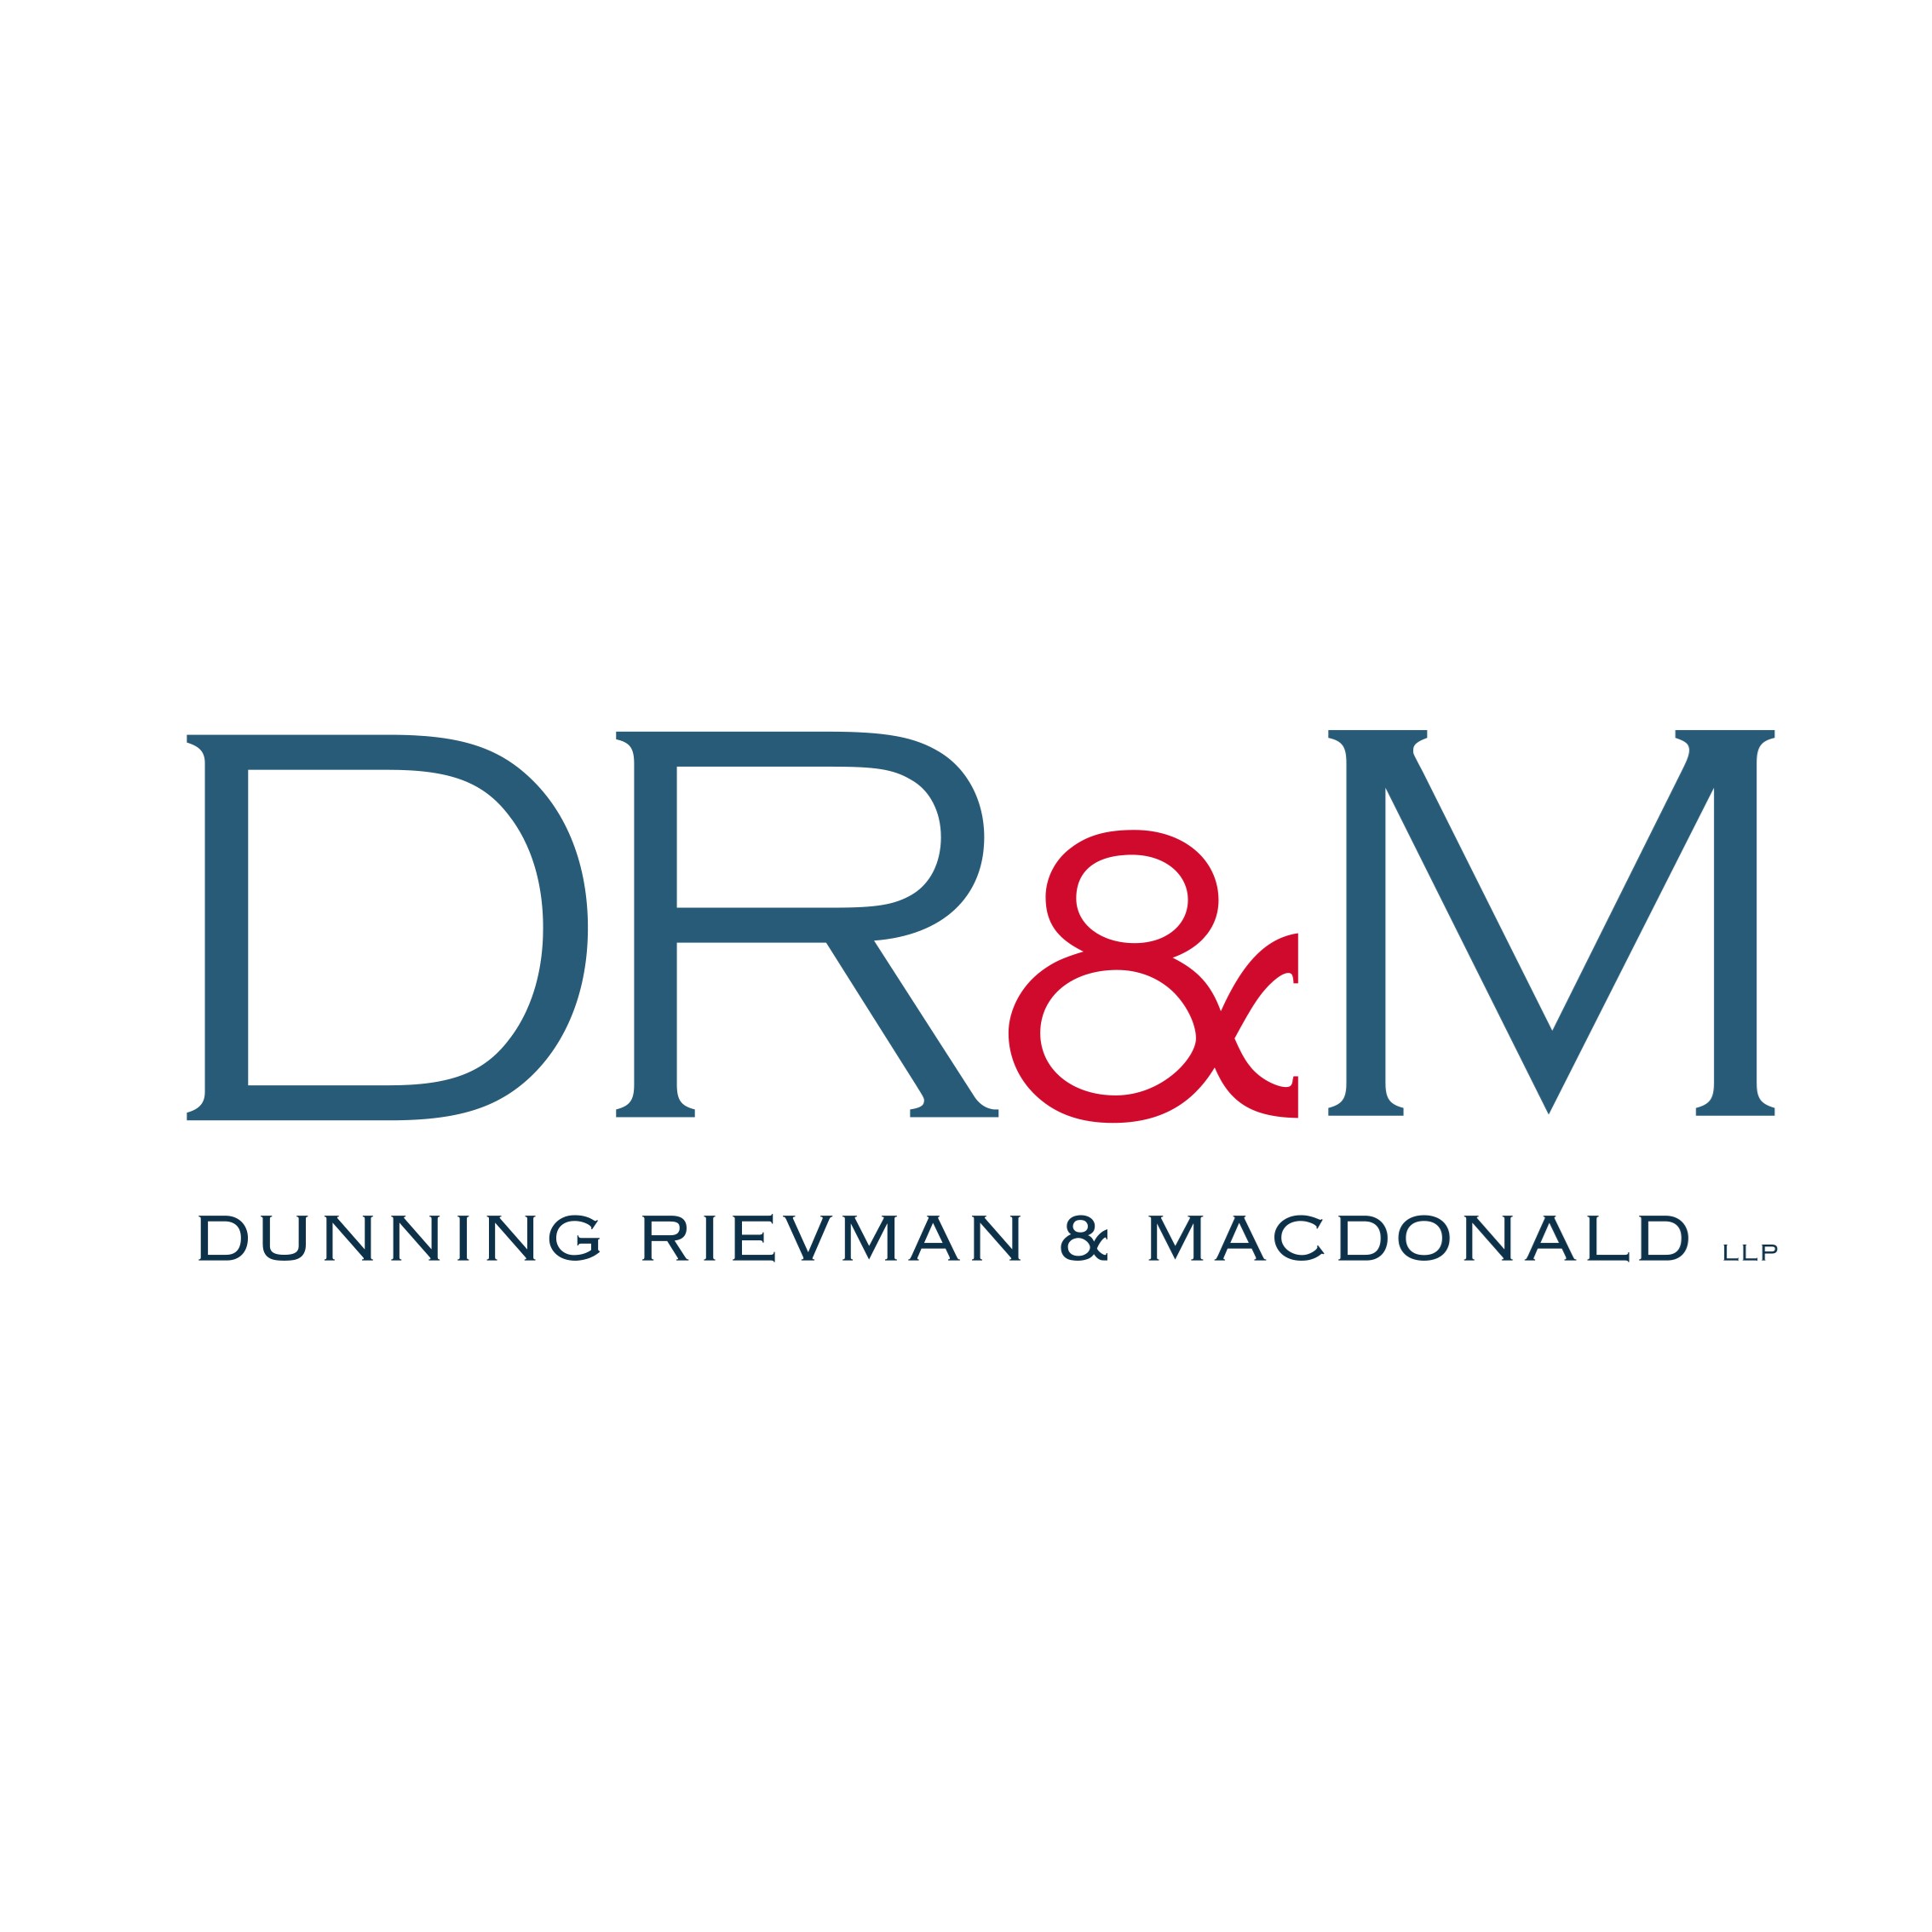 Dunning Rievman & Macdonald